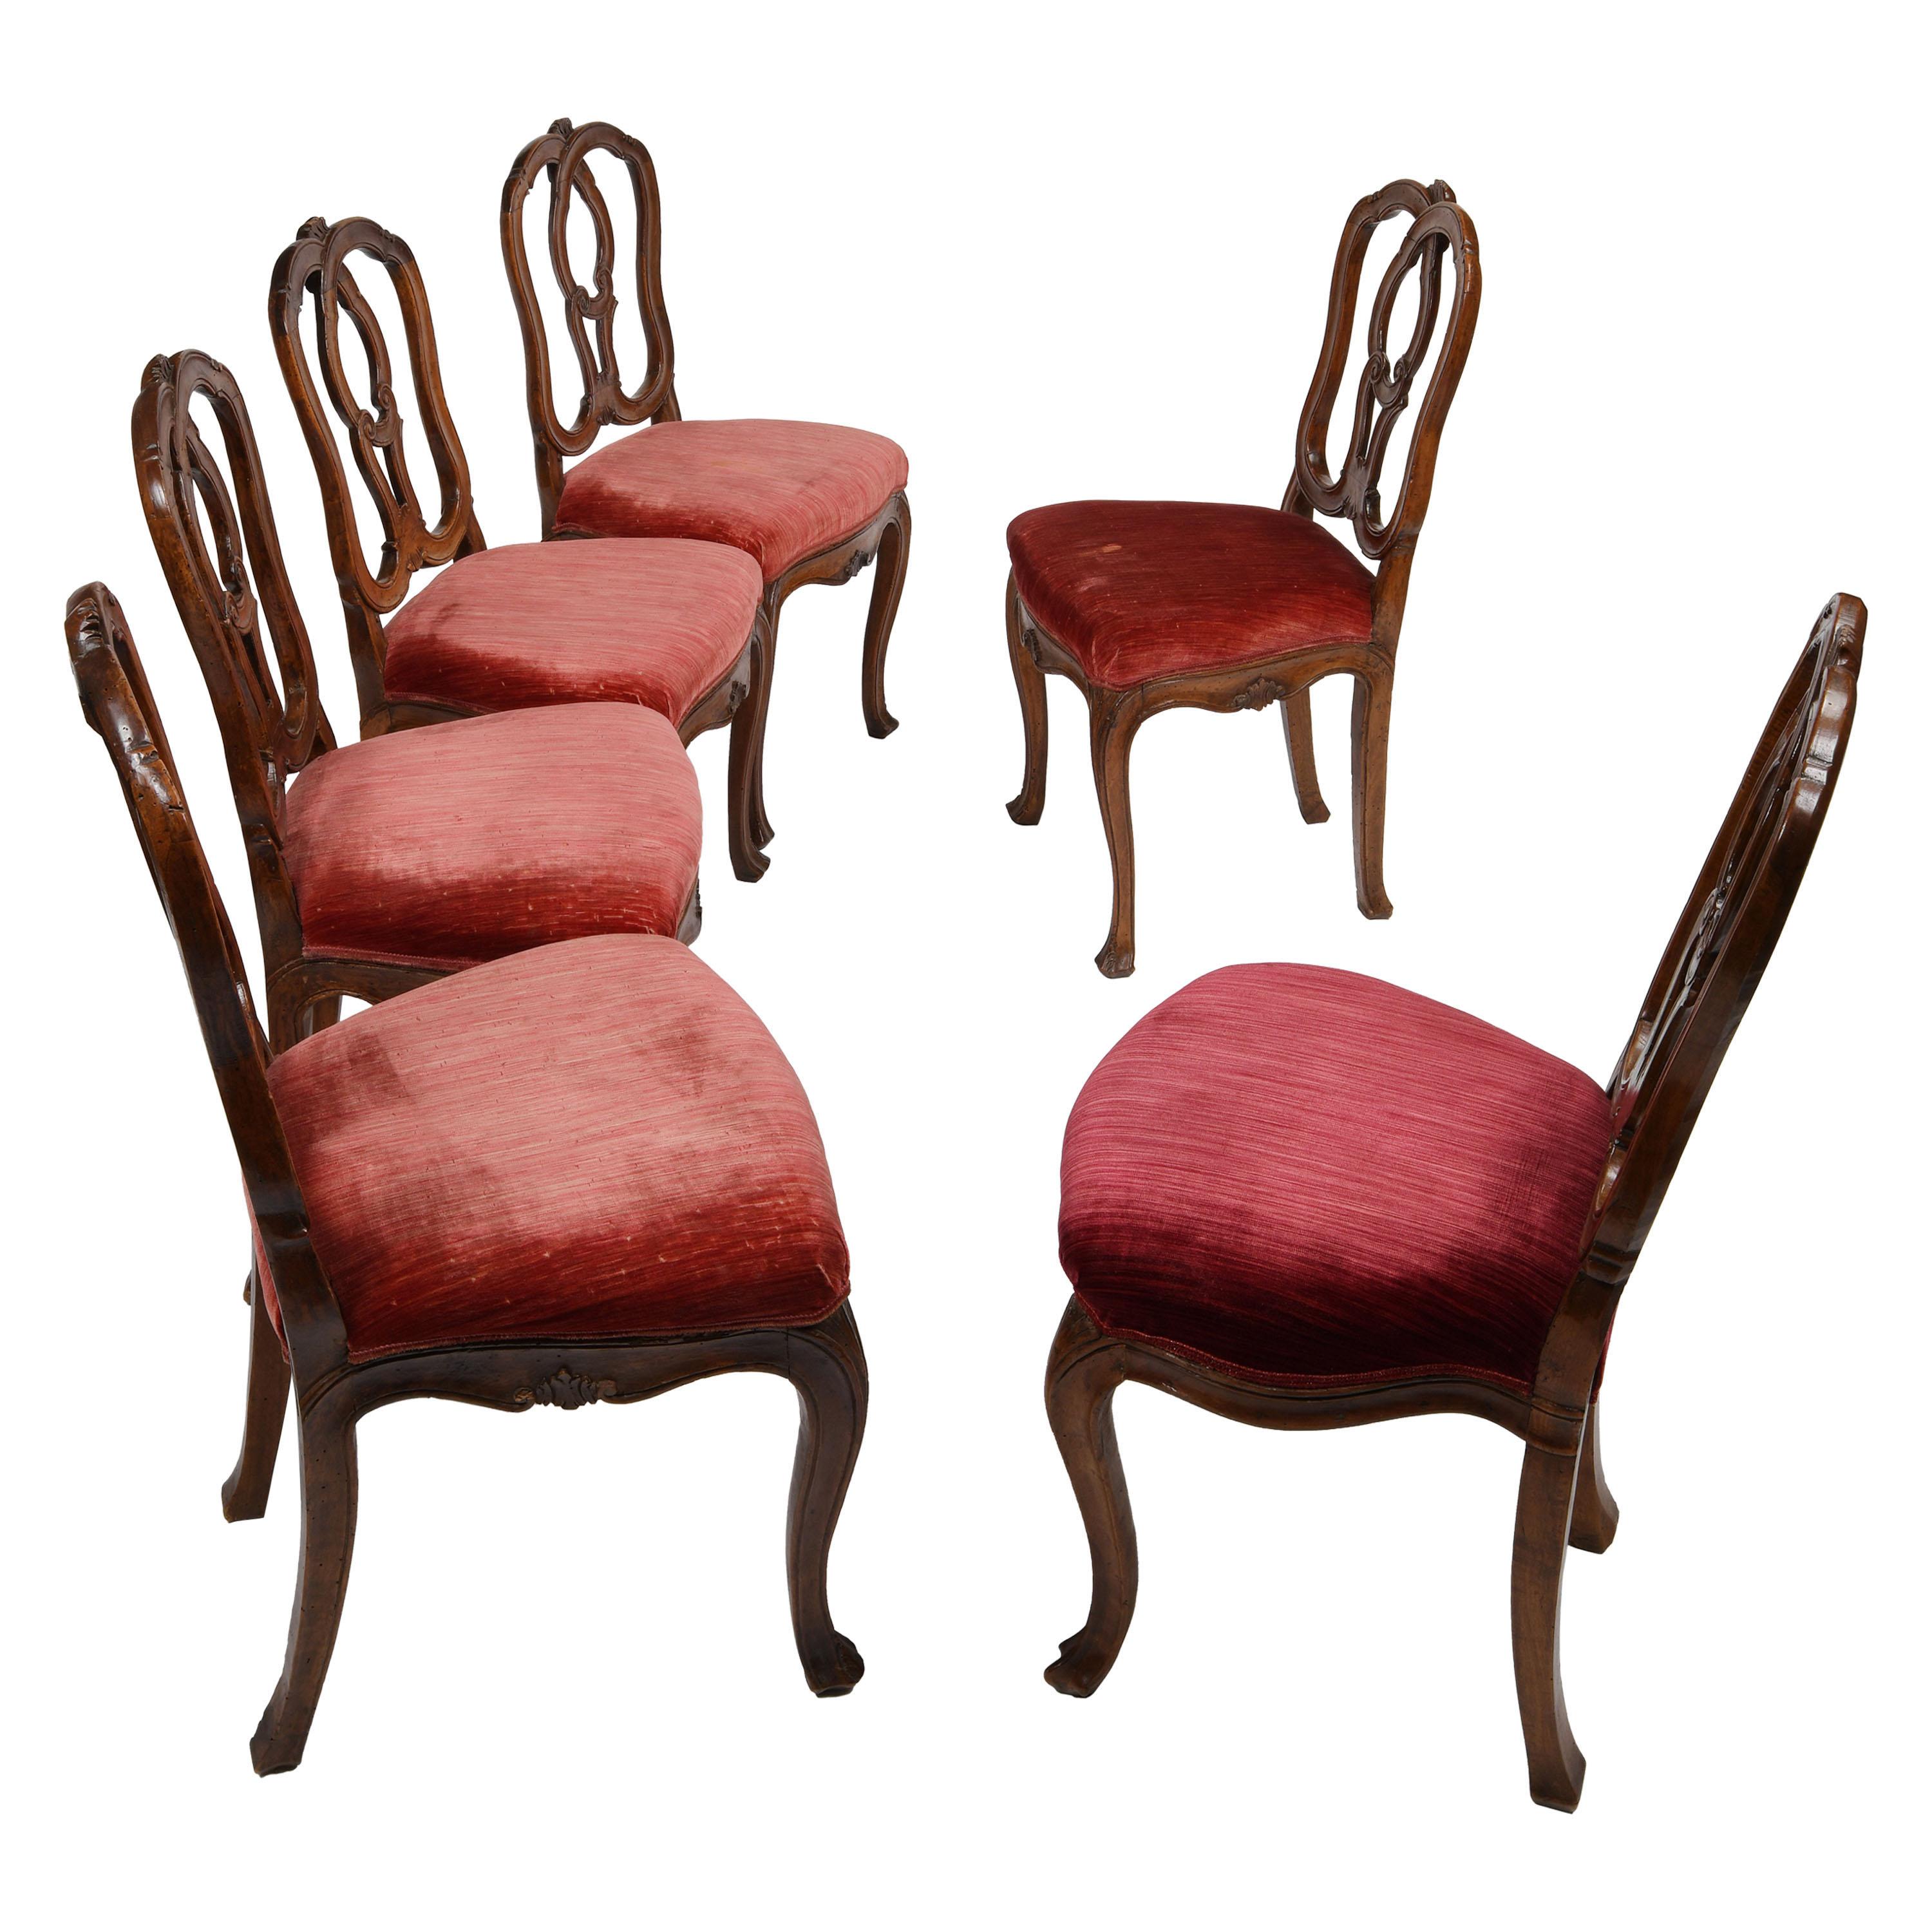 Six Mid-18th Century Italian Chairs, Venice, circa 1750 For Sale